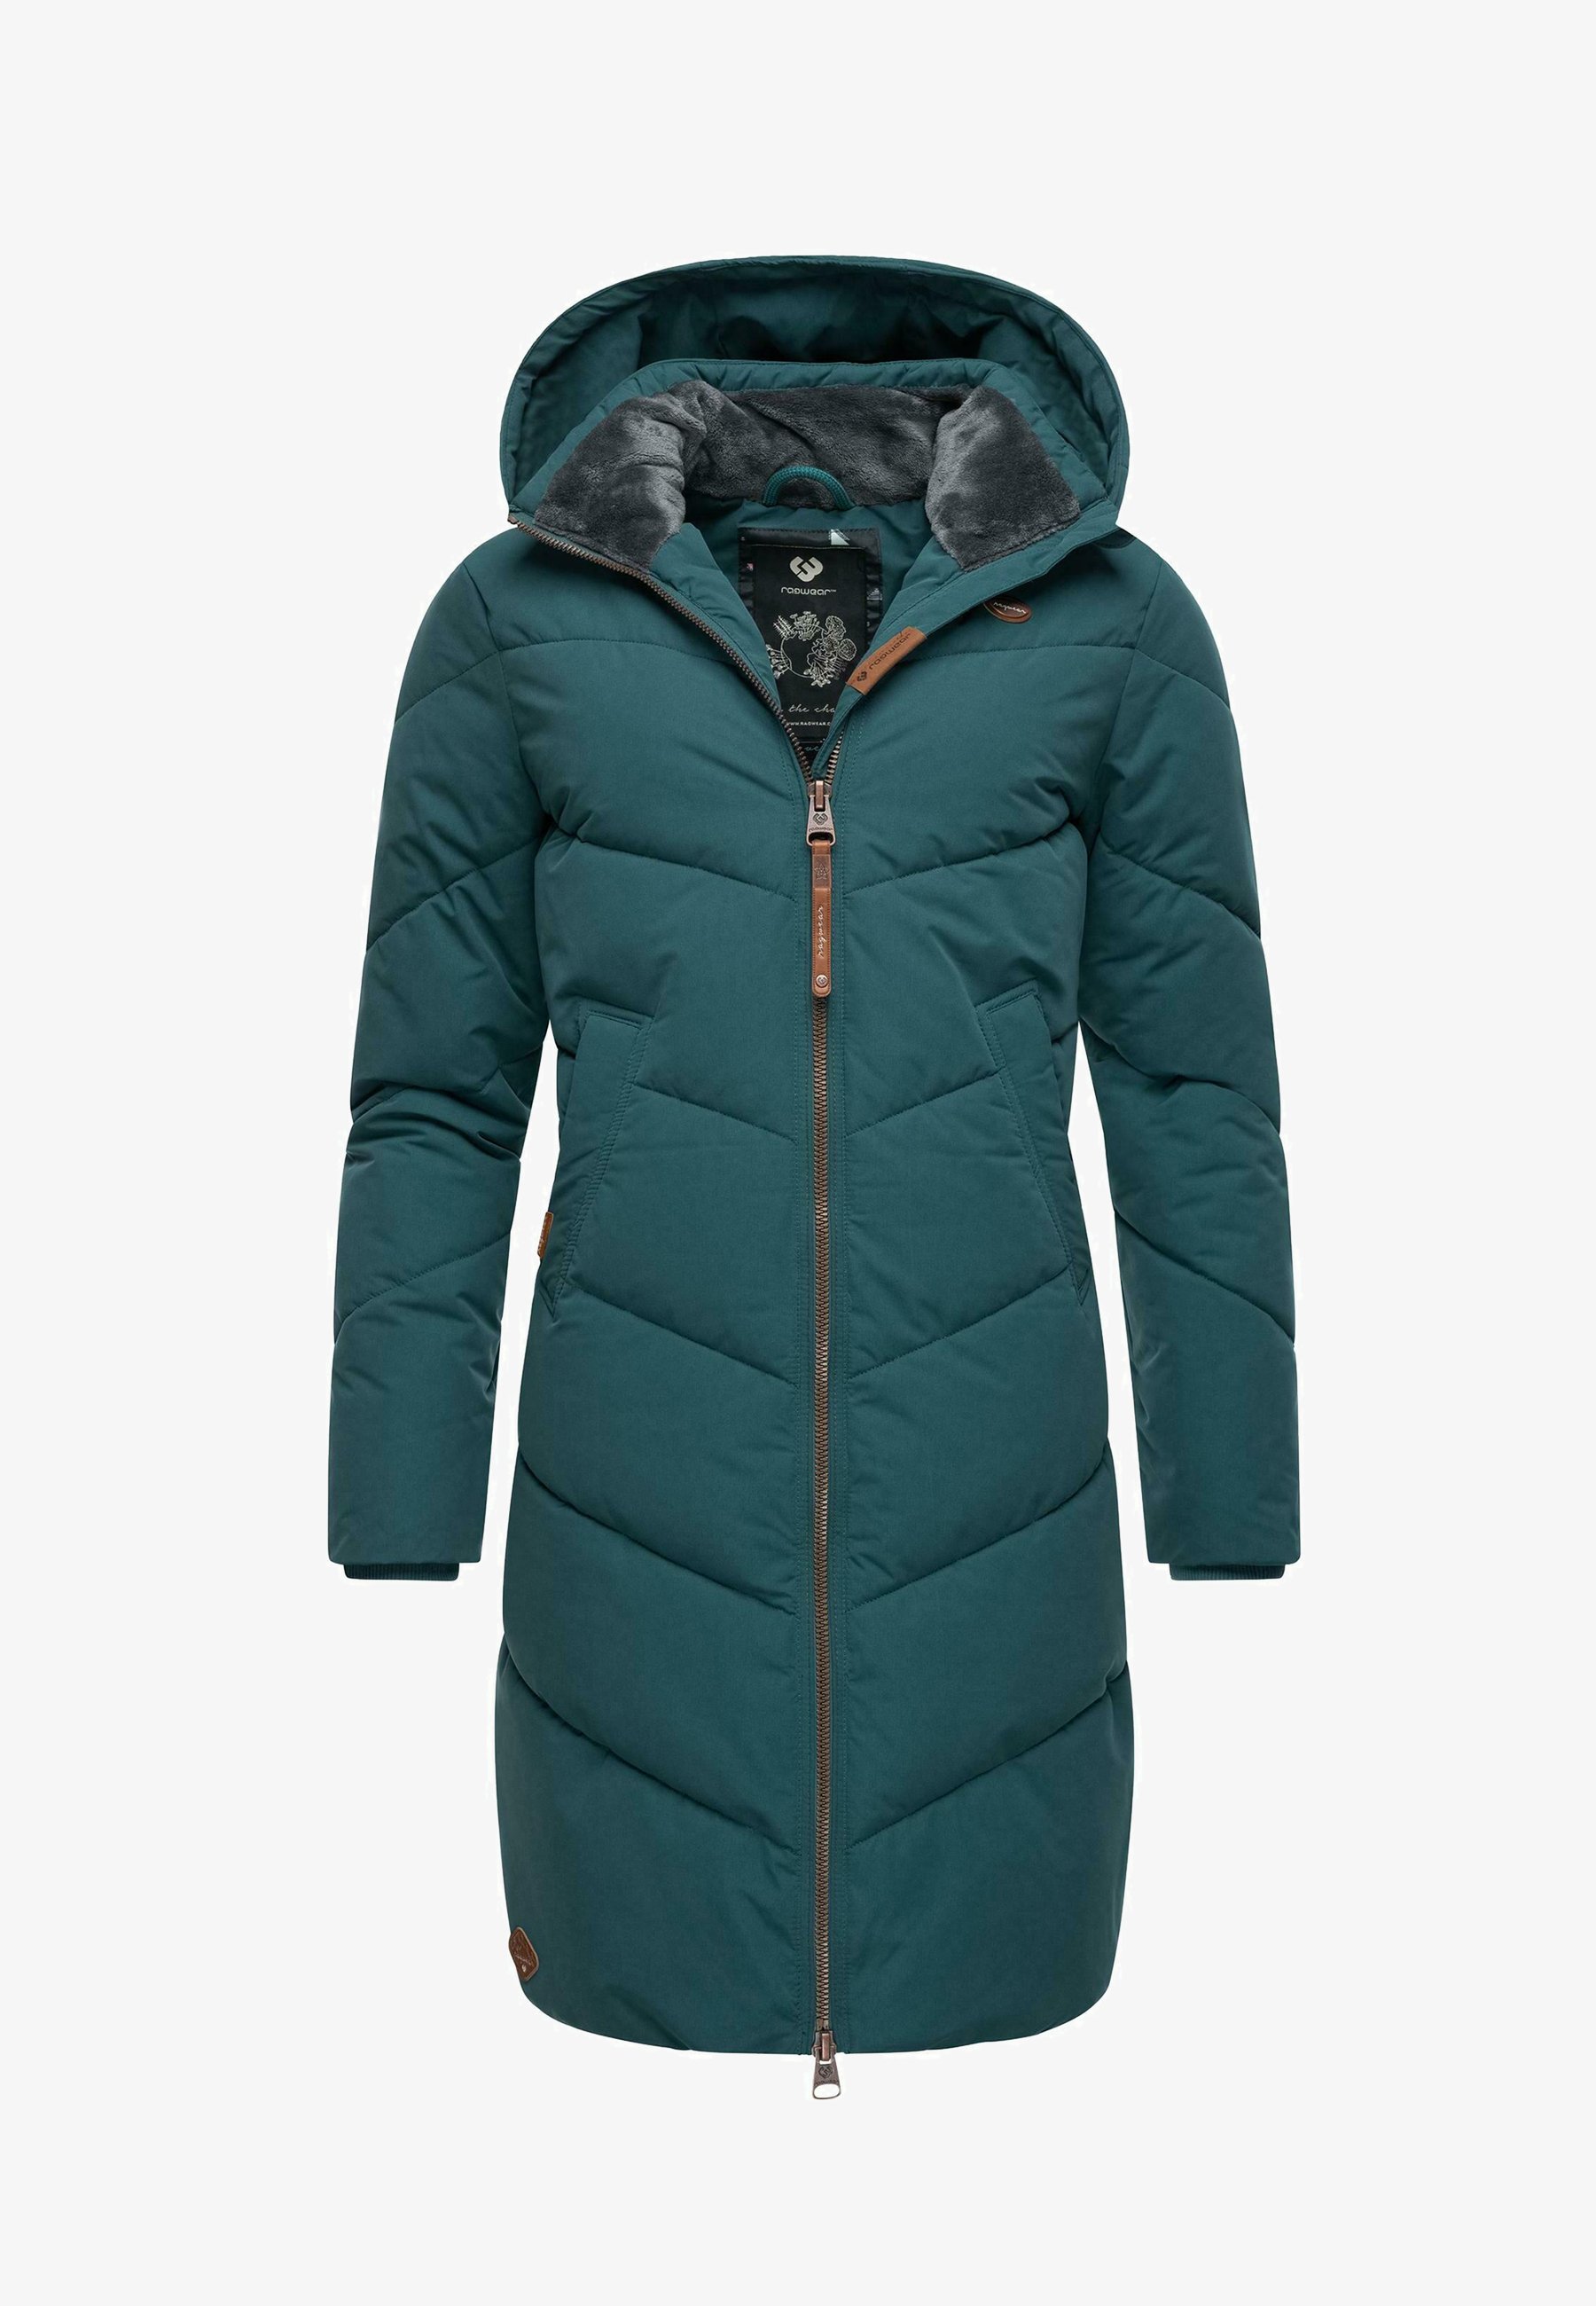 Пальто зимнее Ragwear, зеленый зимнее пальто jannisa ragwear цвет pine green